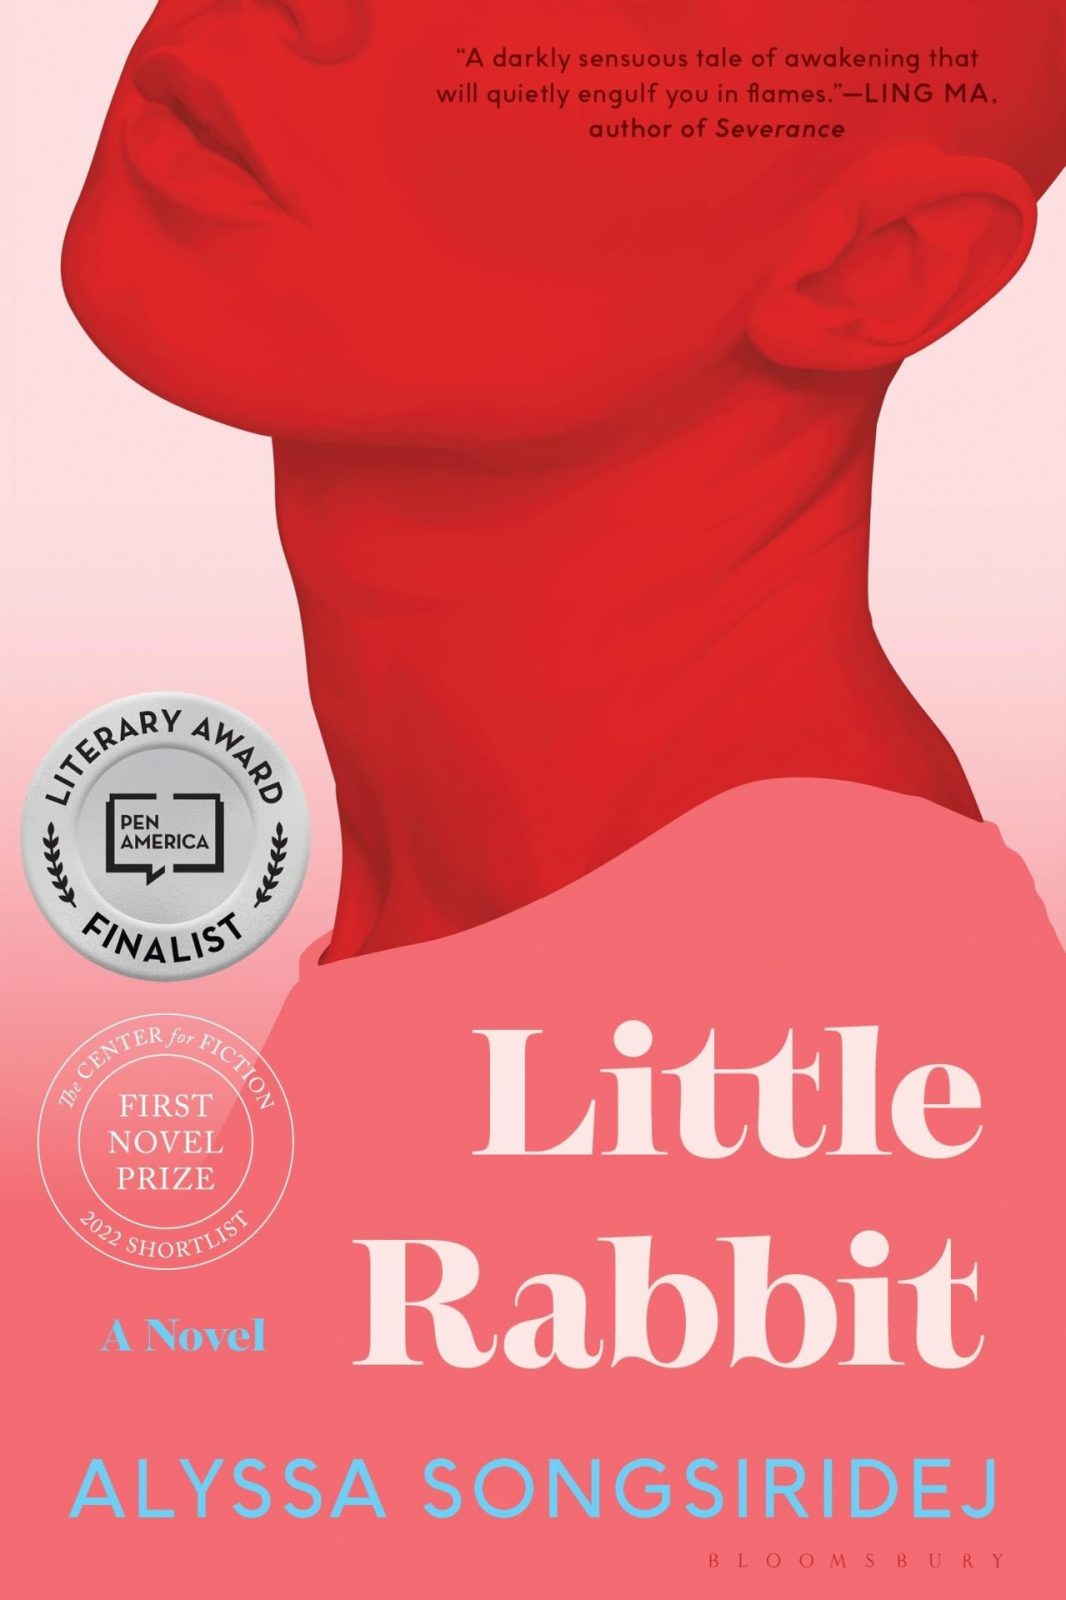 Little Rabbit novel, paperback edition
